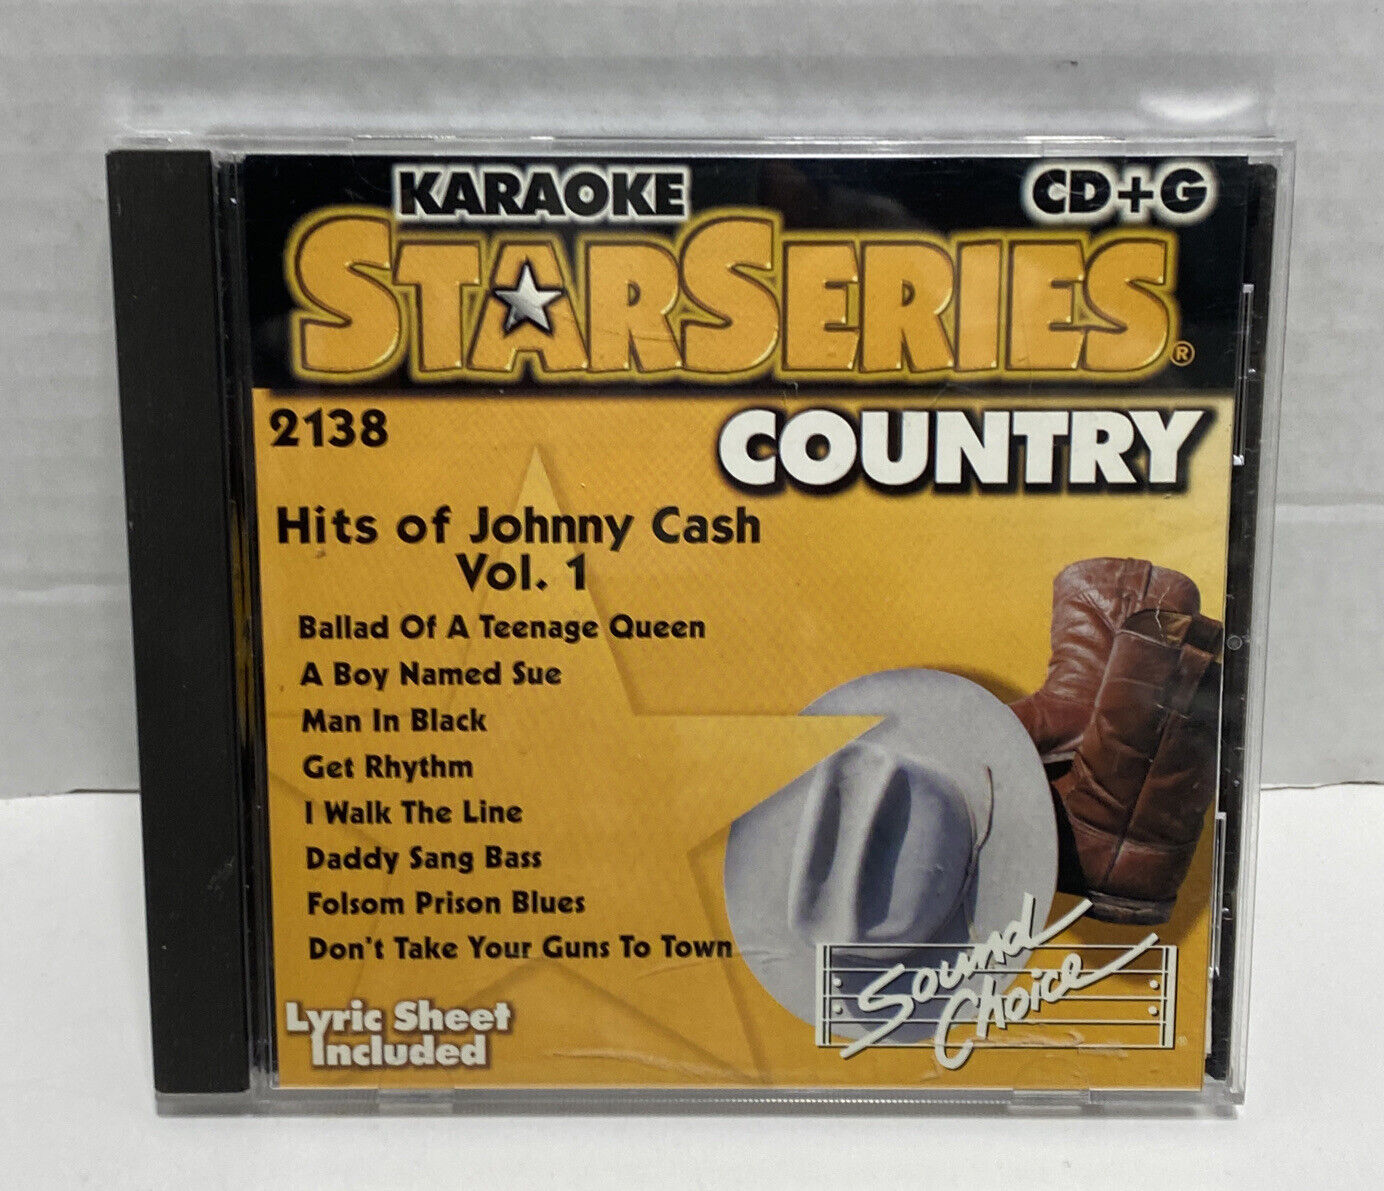 Cash, Johnny Vol. 1-Hits Of Johnny Cash CD Album Compilation Karaoke Lyric Sheet